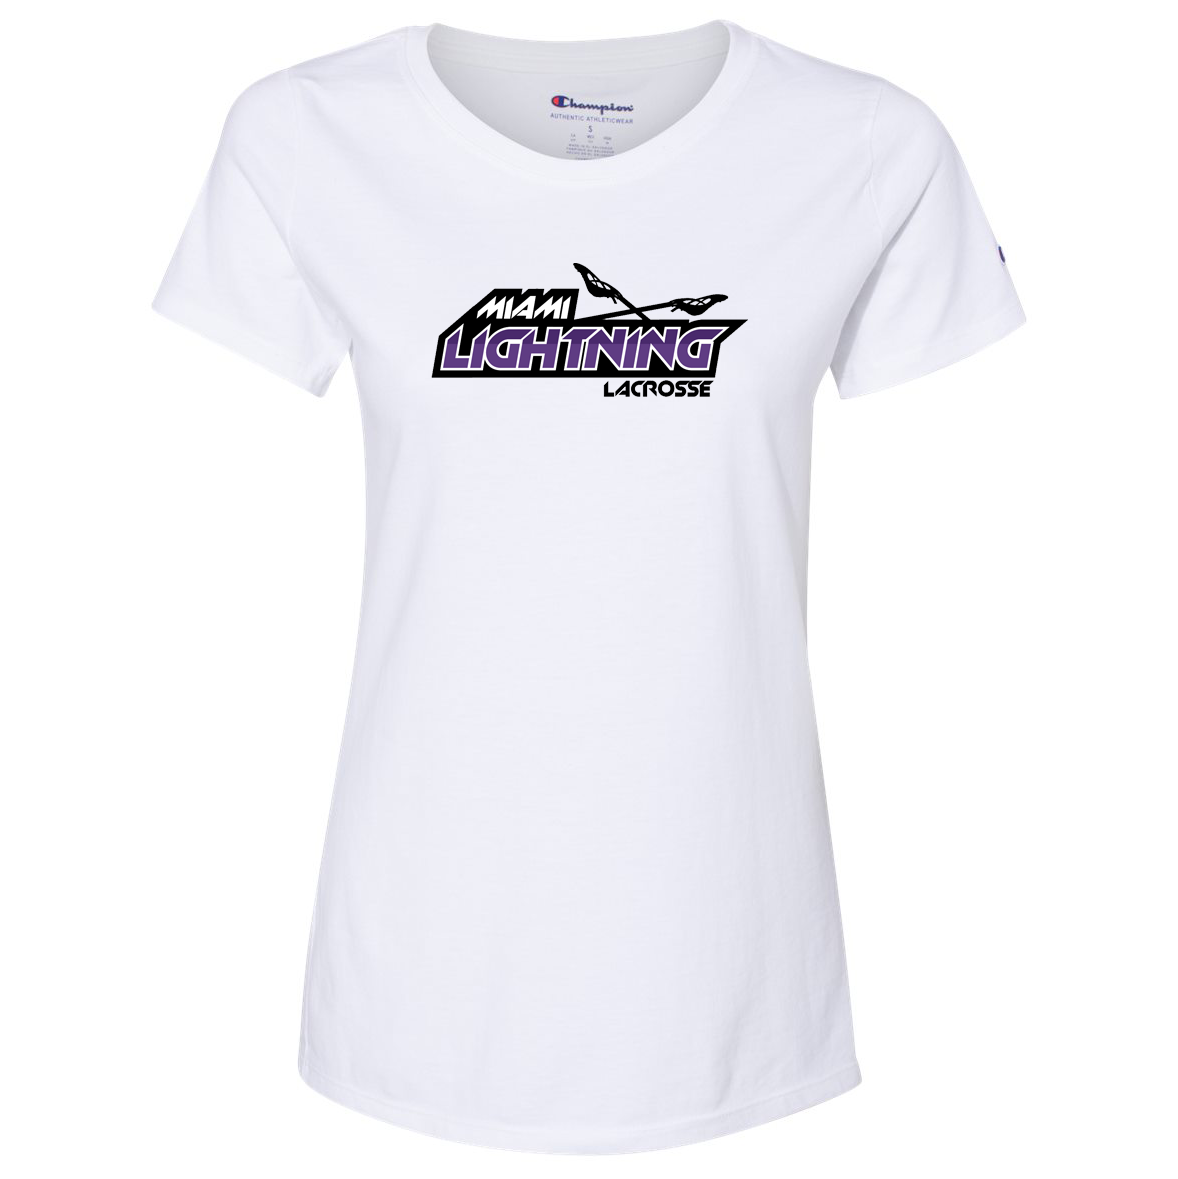 Miami Lightning LacrosseChampion Short Sleeve T-Shirt